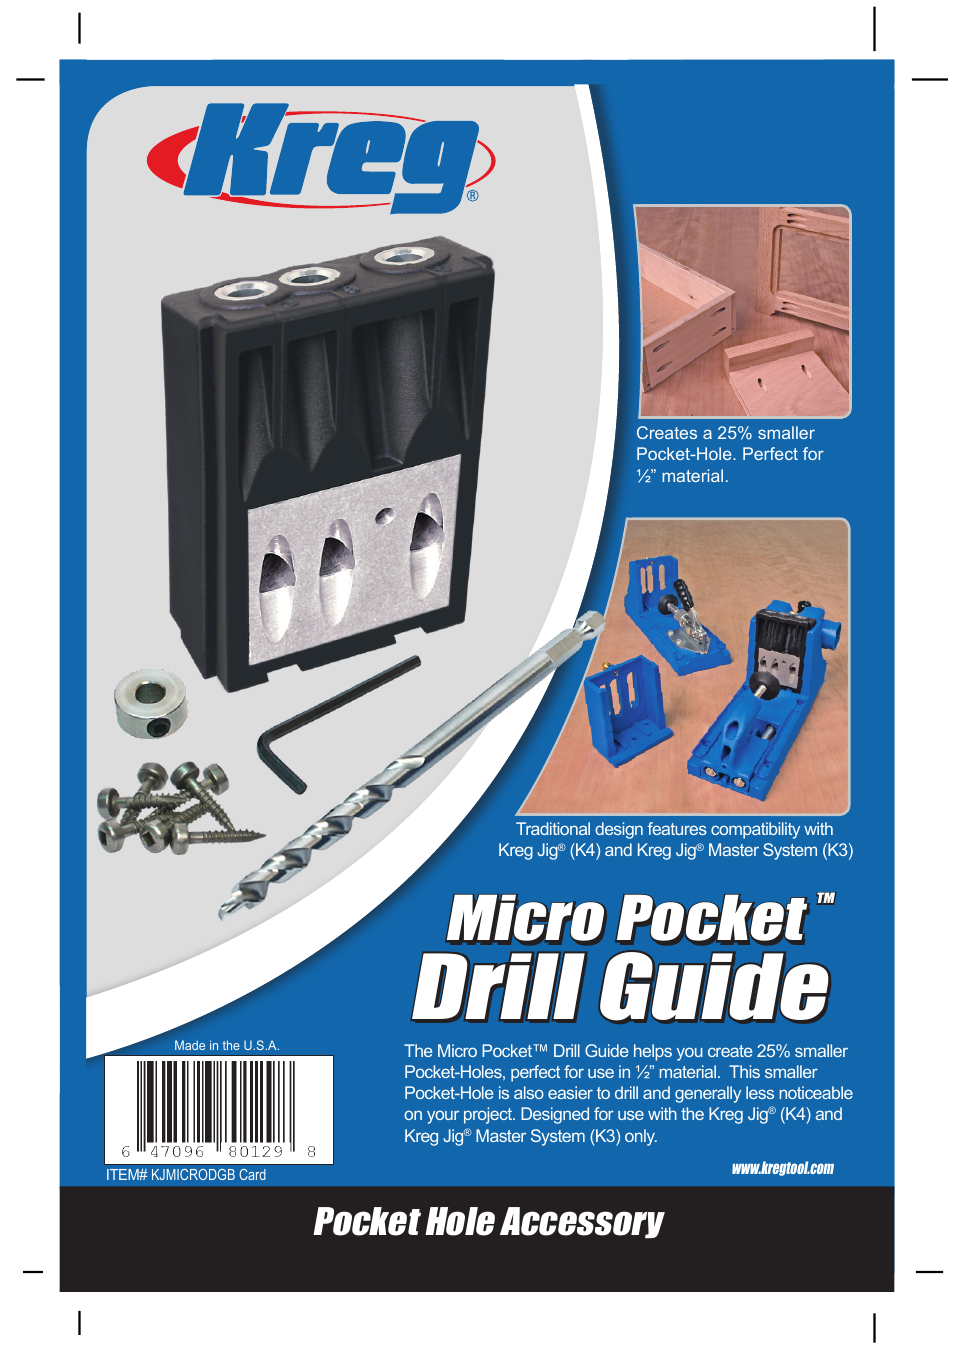 KJMICRODGB Micro-Pocket Drill Guide